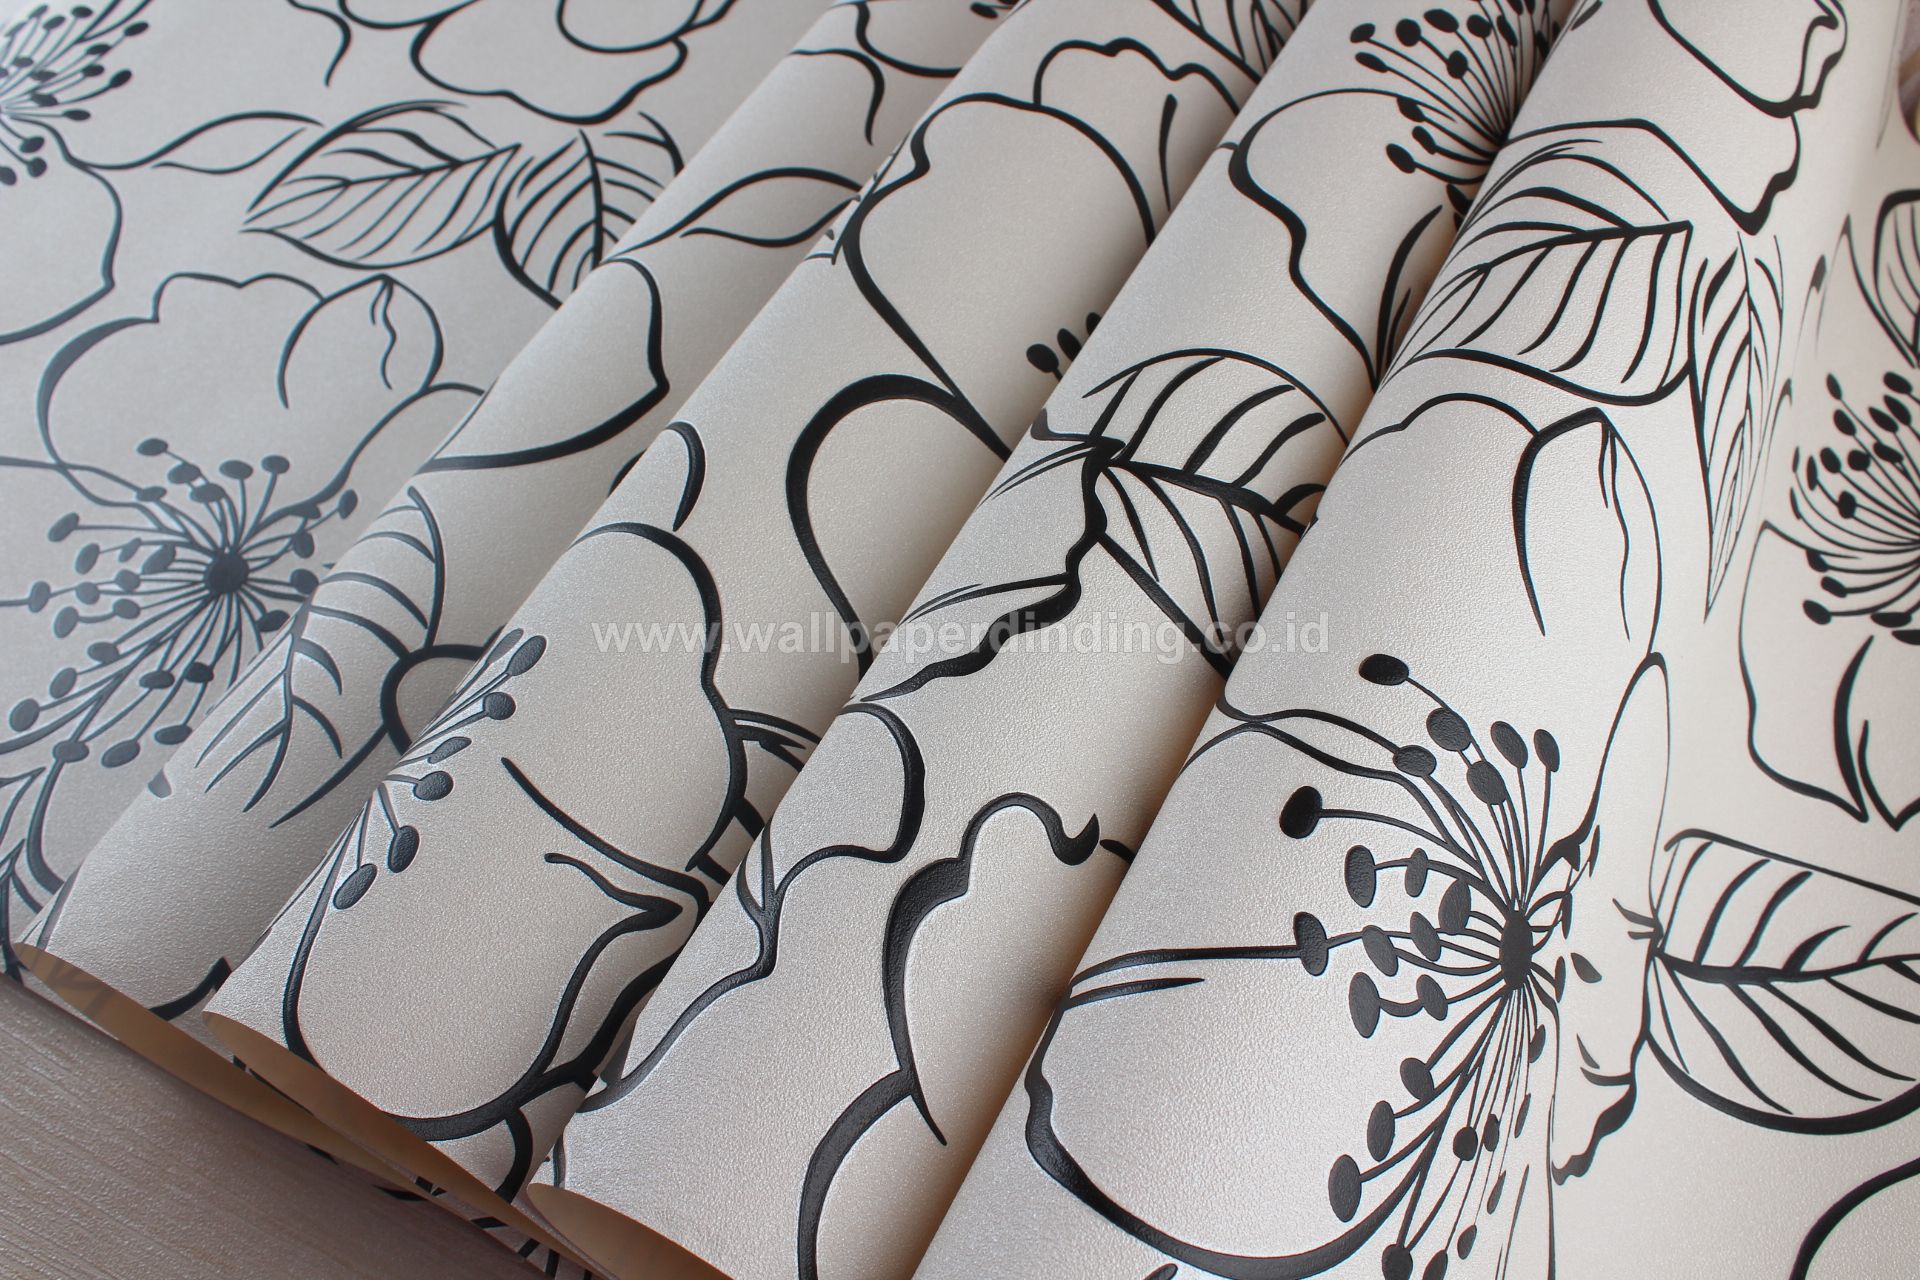 Wallpaper Dinding Bunga Hitam Putih D-2d005 - Bed Skirt , HD Wallpaper & Backgrounds